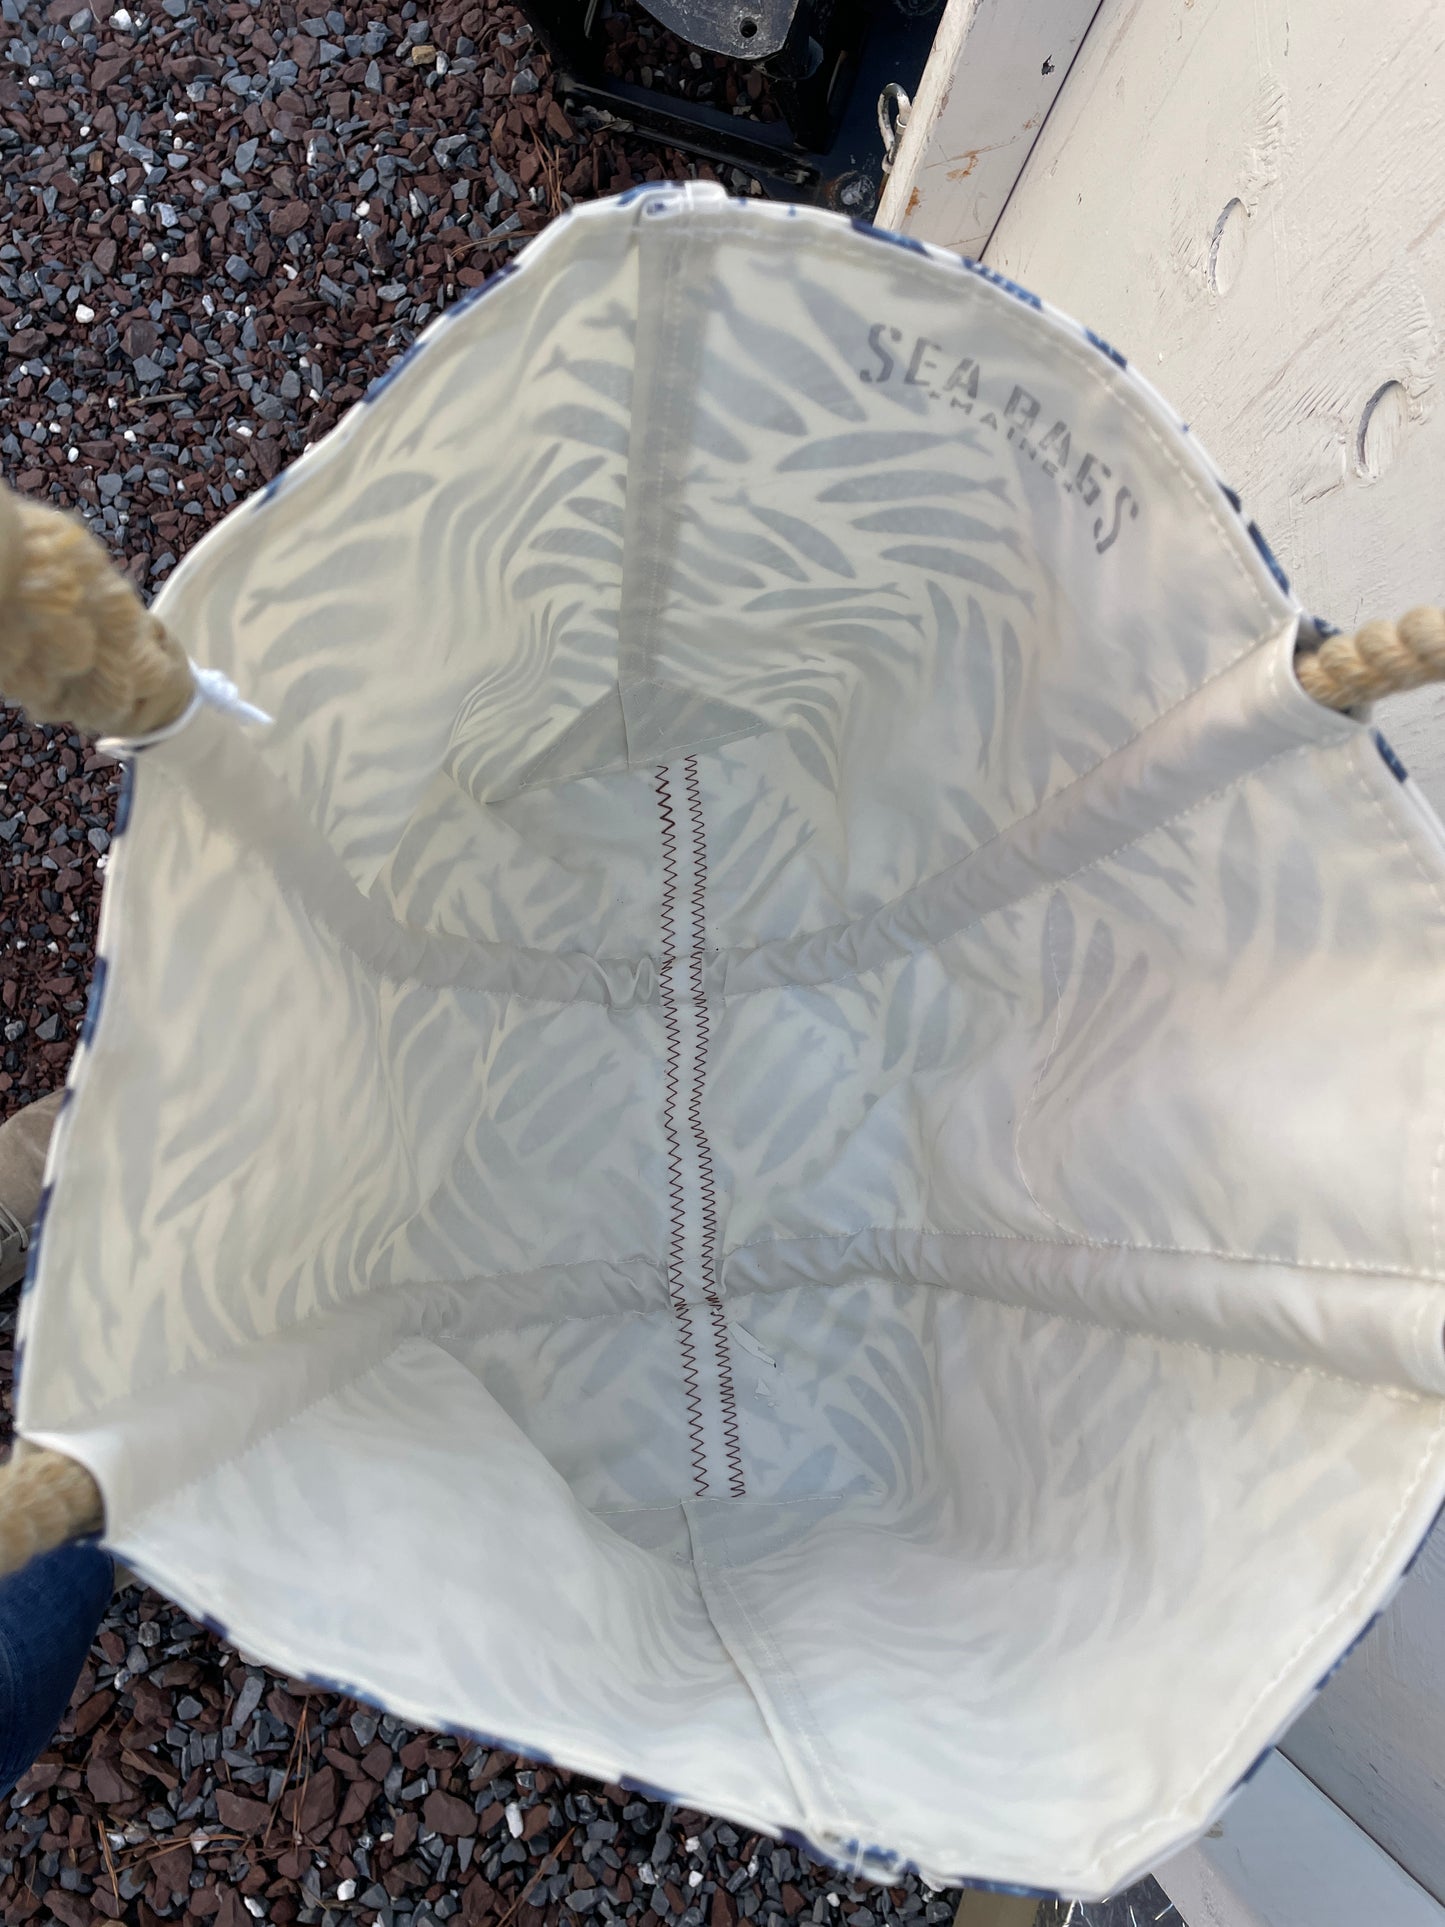 Sea Bags Maine Fish Print Medium Tote